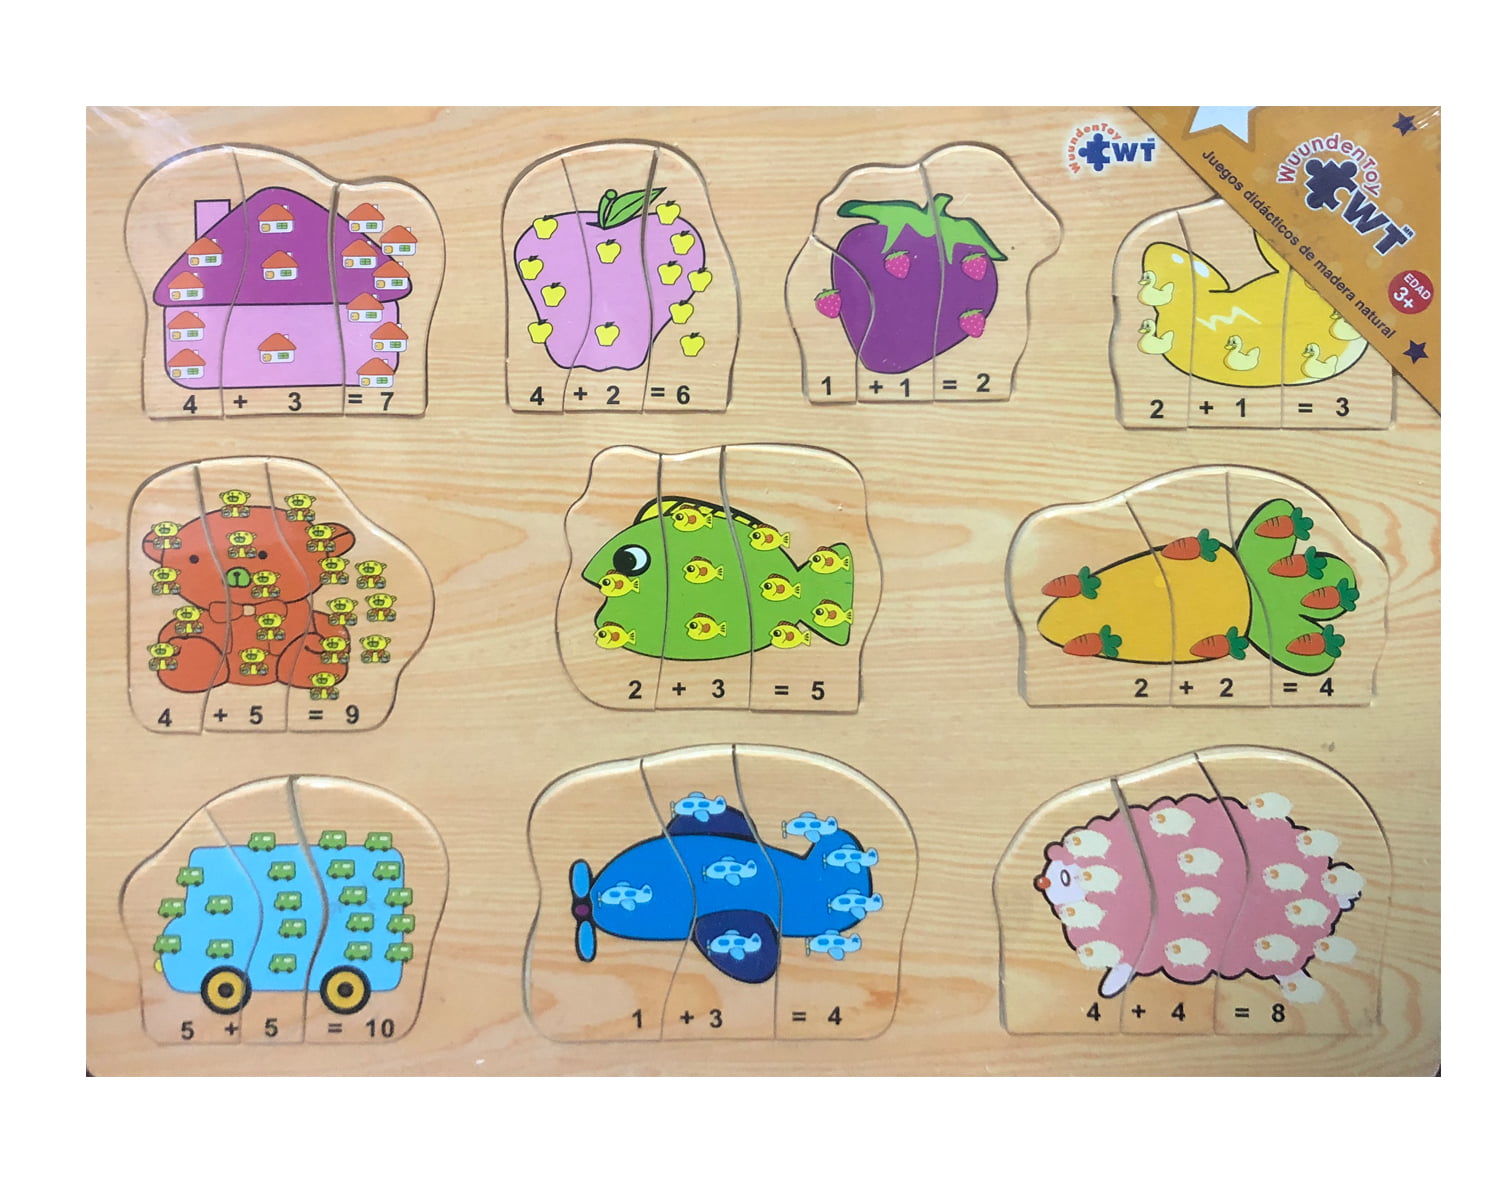 Fantasy Cartoon Airship Mushrooms 300 Pcs Jigsaw Puzzle DIY Educational Toy Gift 